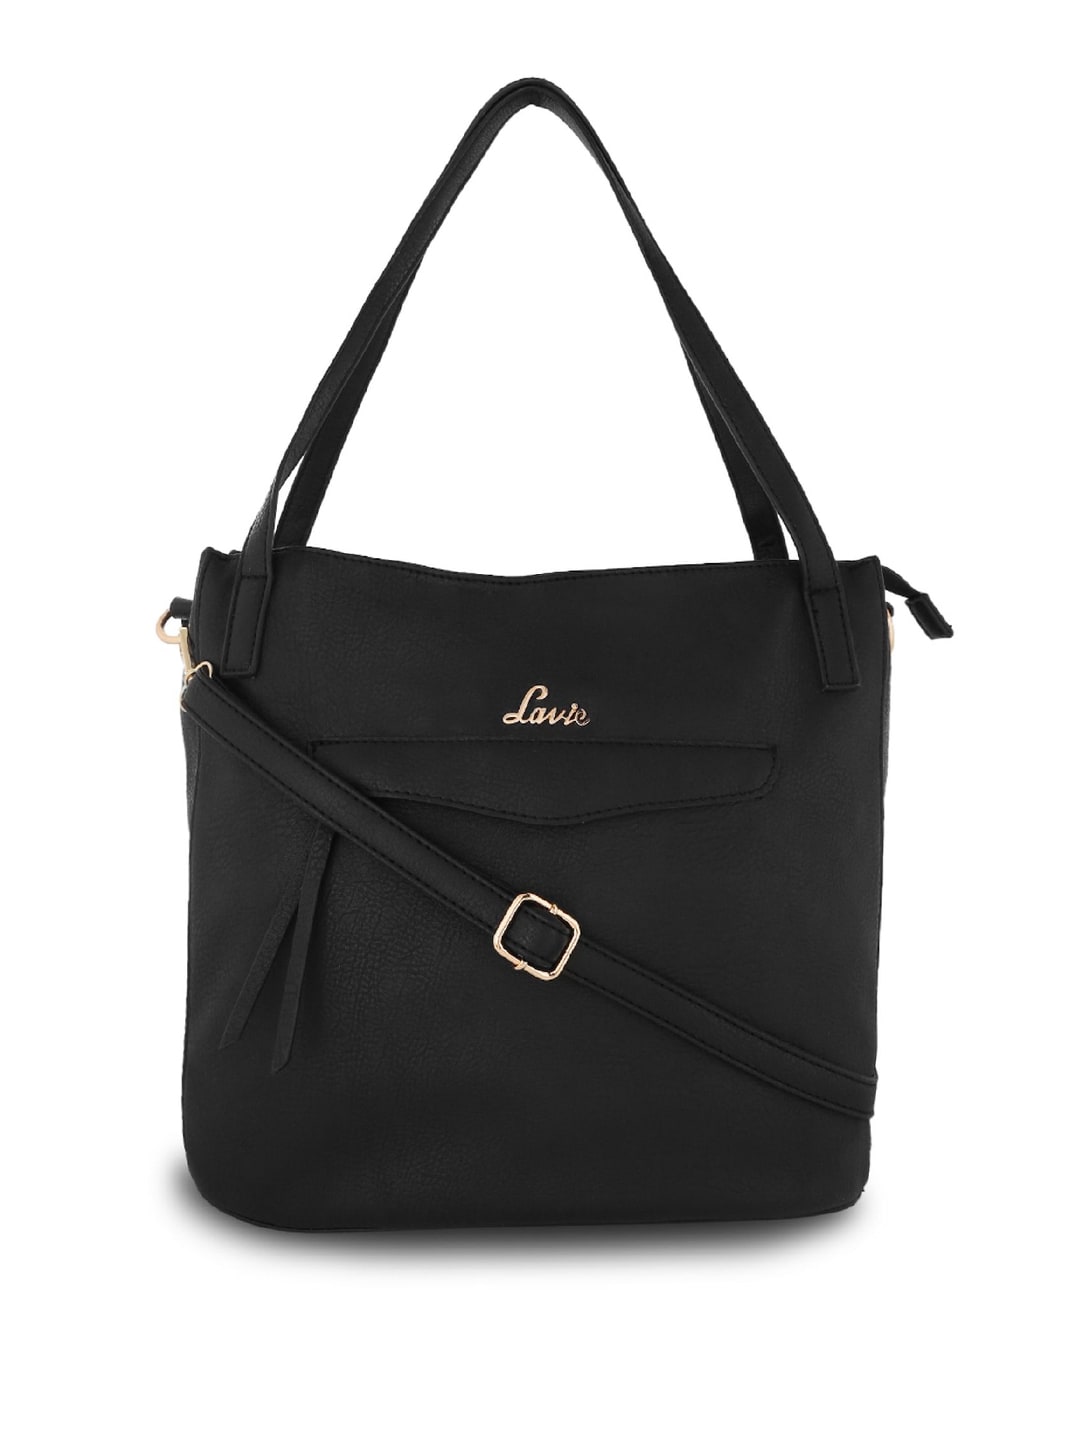 Lavie Women Black Solid Structured Shoulder Bag Price in India